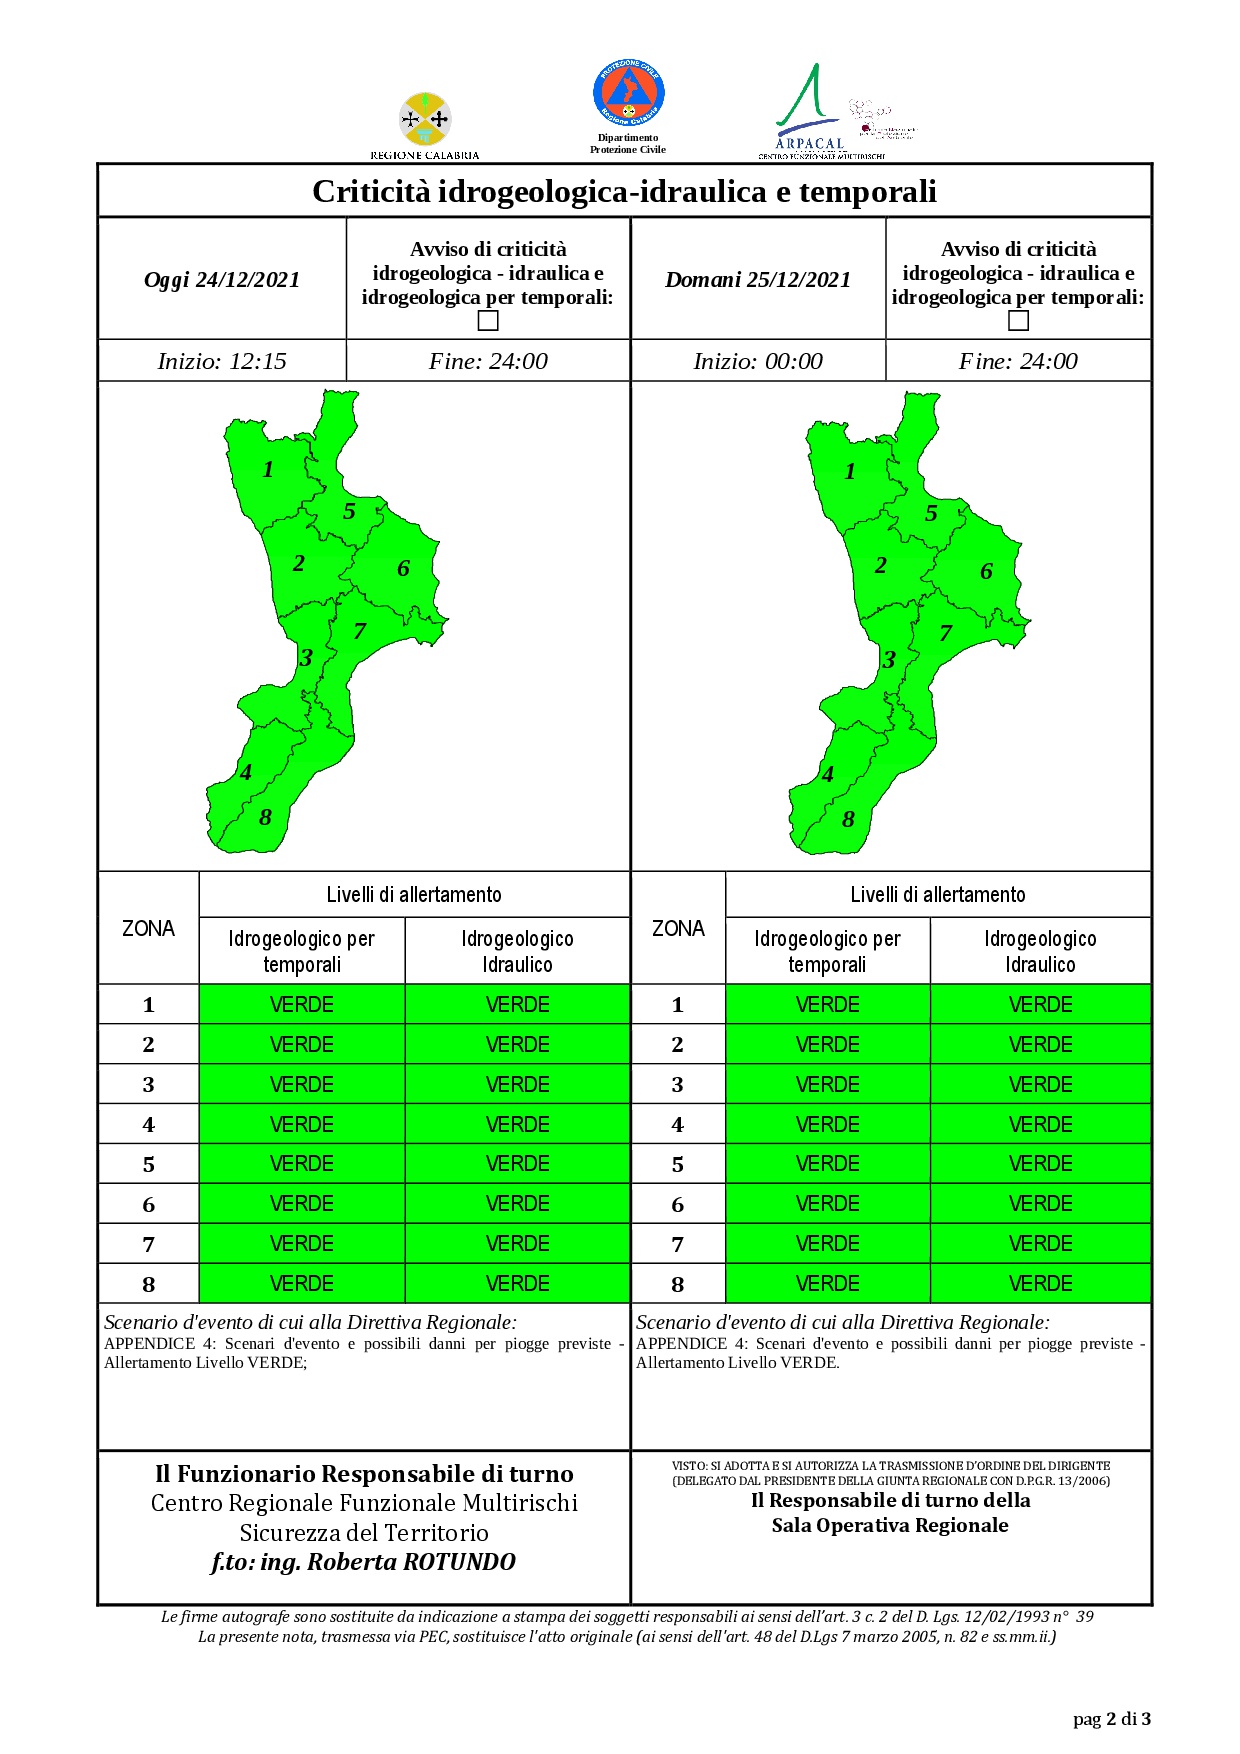 Criticità idrogeologica-idraulica e temporali in Calabria 24-12-2021